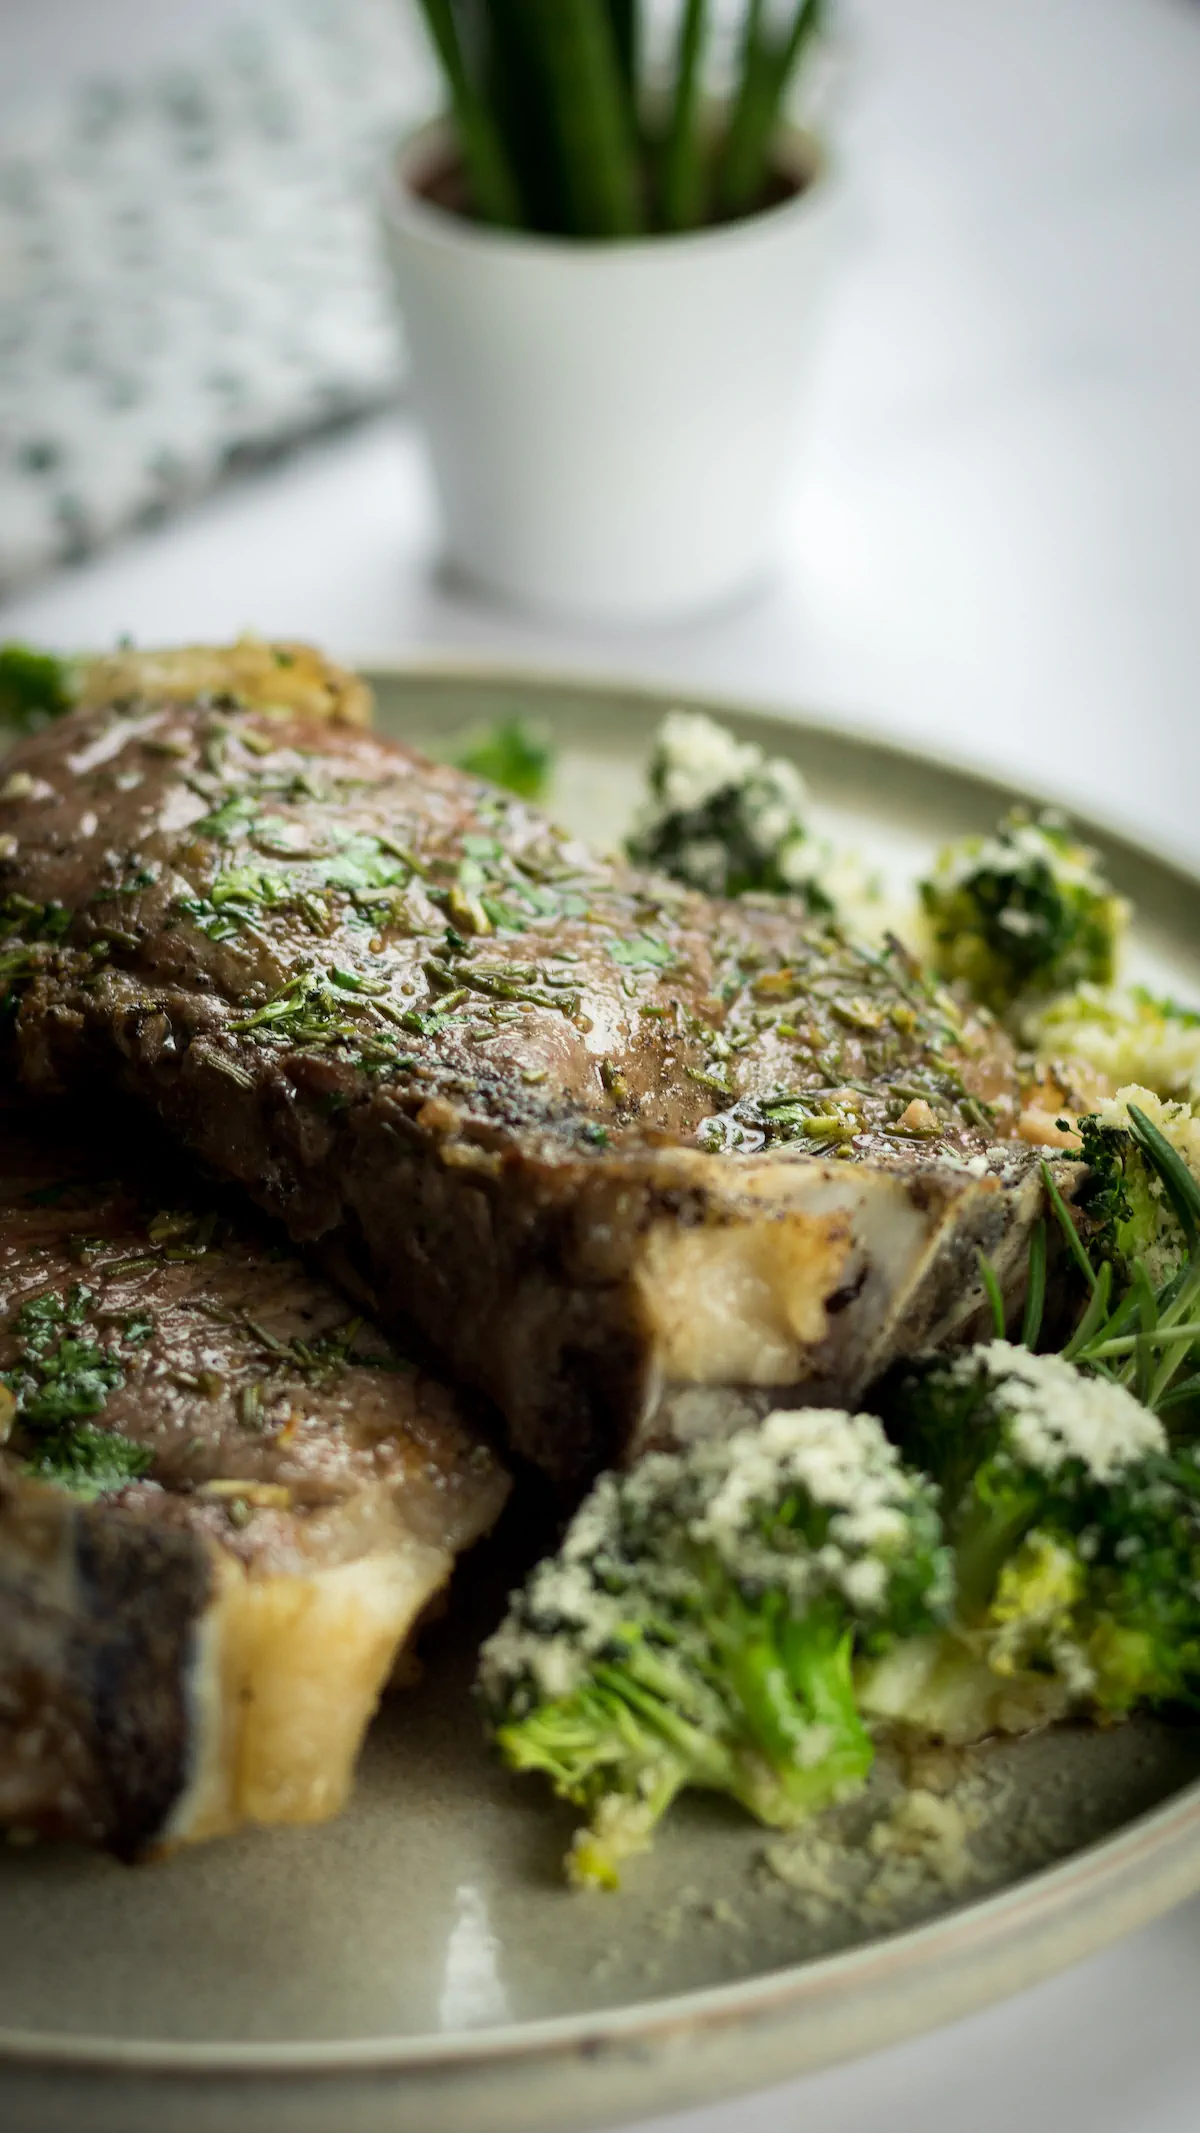 Plate of homemade baked ribeye steak and cheesy roasted broccoli.